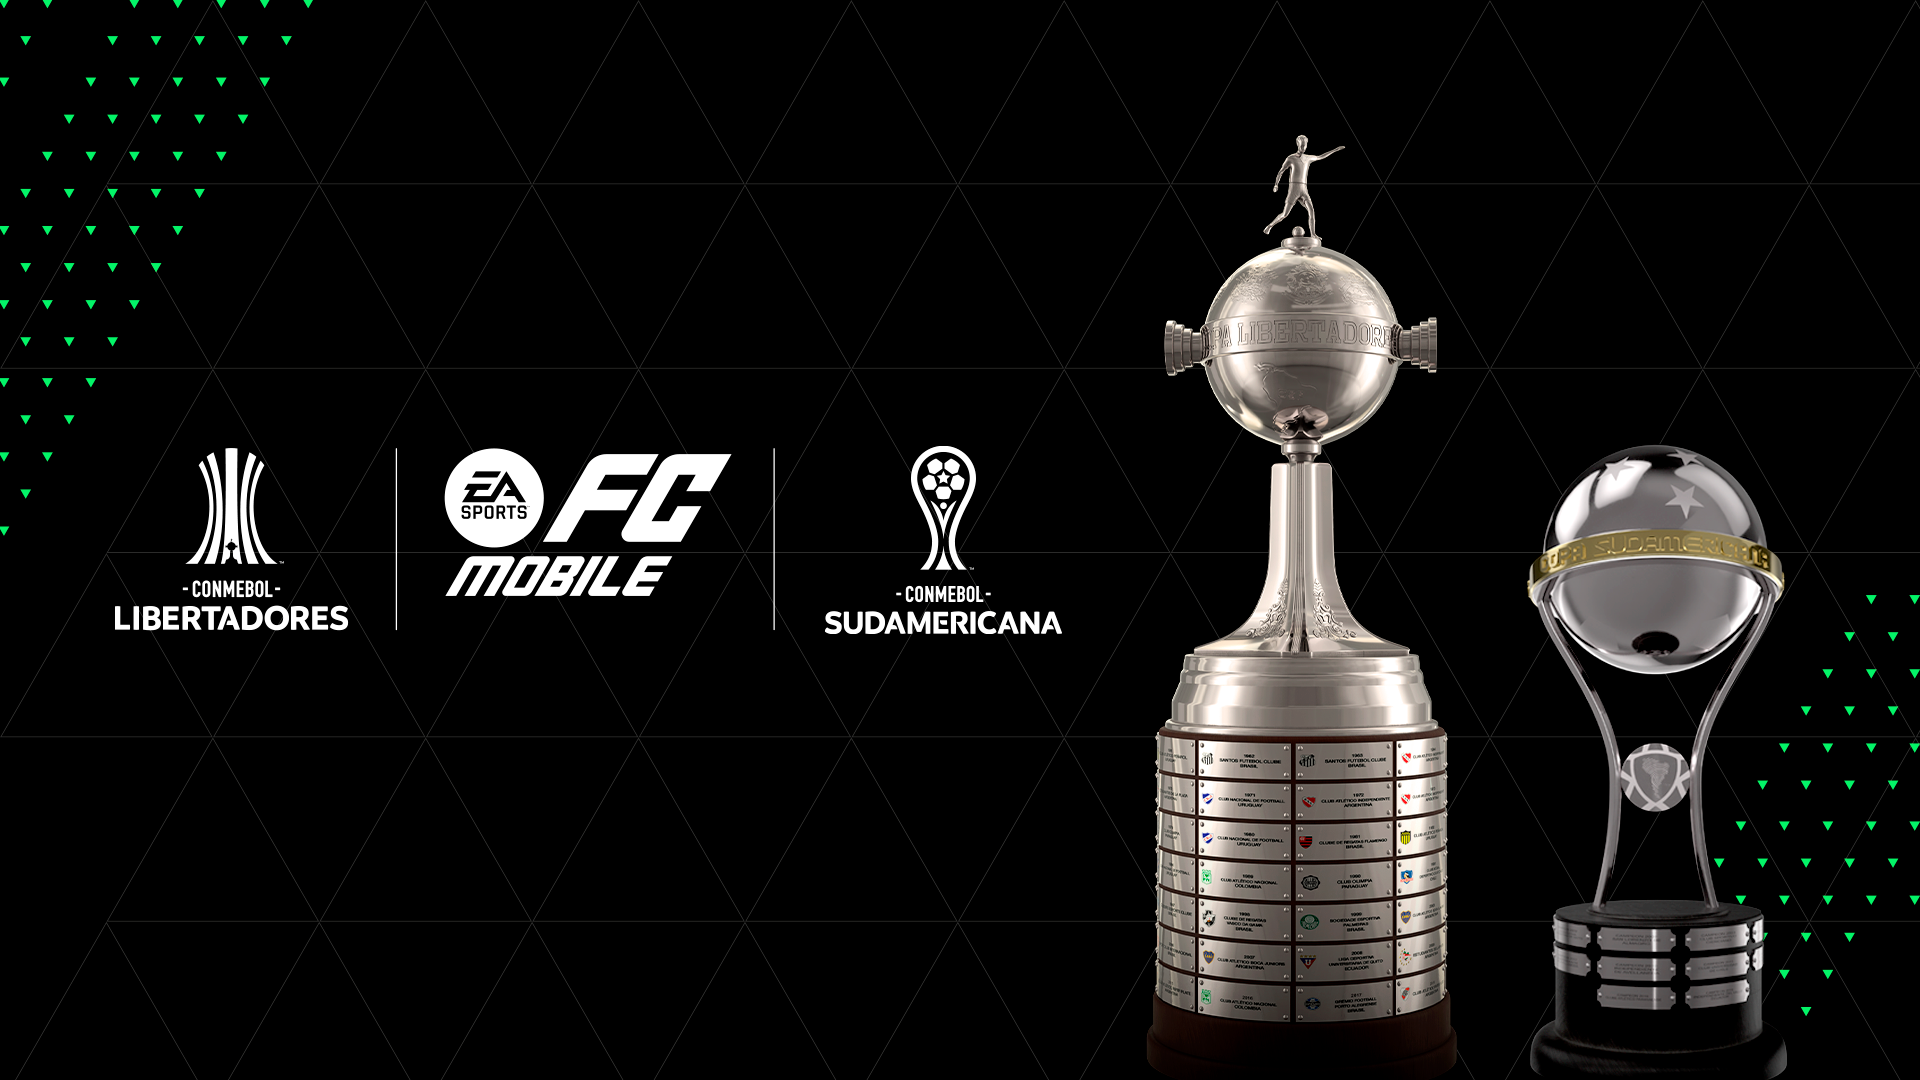 Electronic Arts desvela el logo de EA Sports FC, la marca sucesora de FIFA